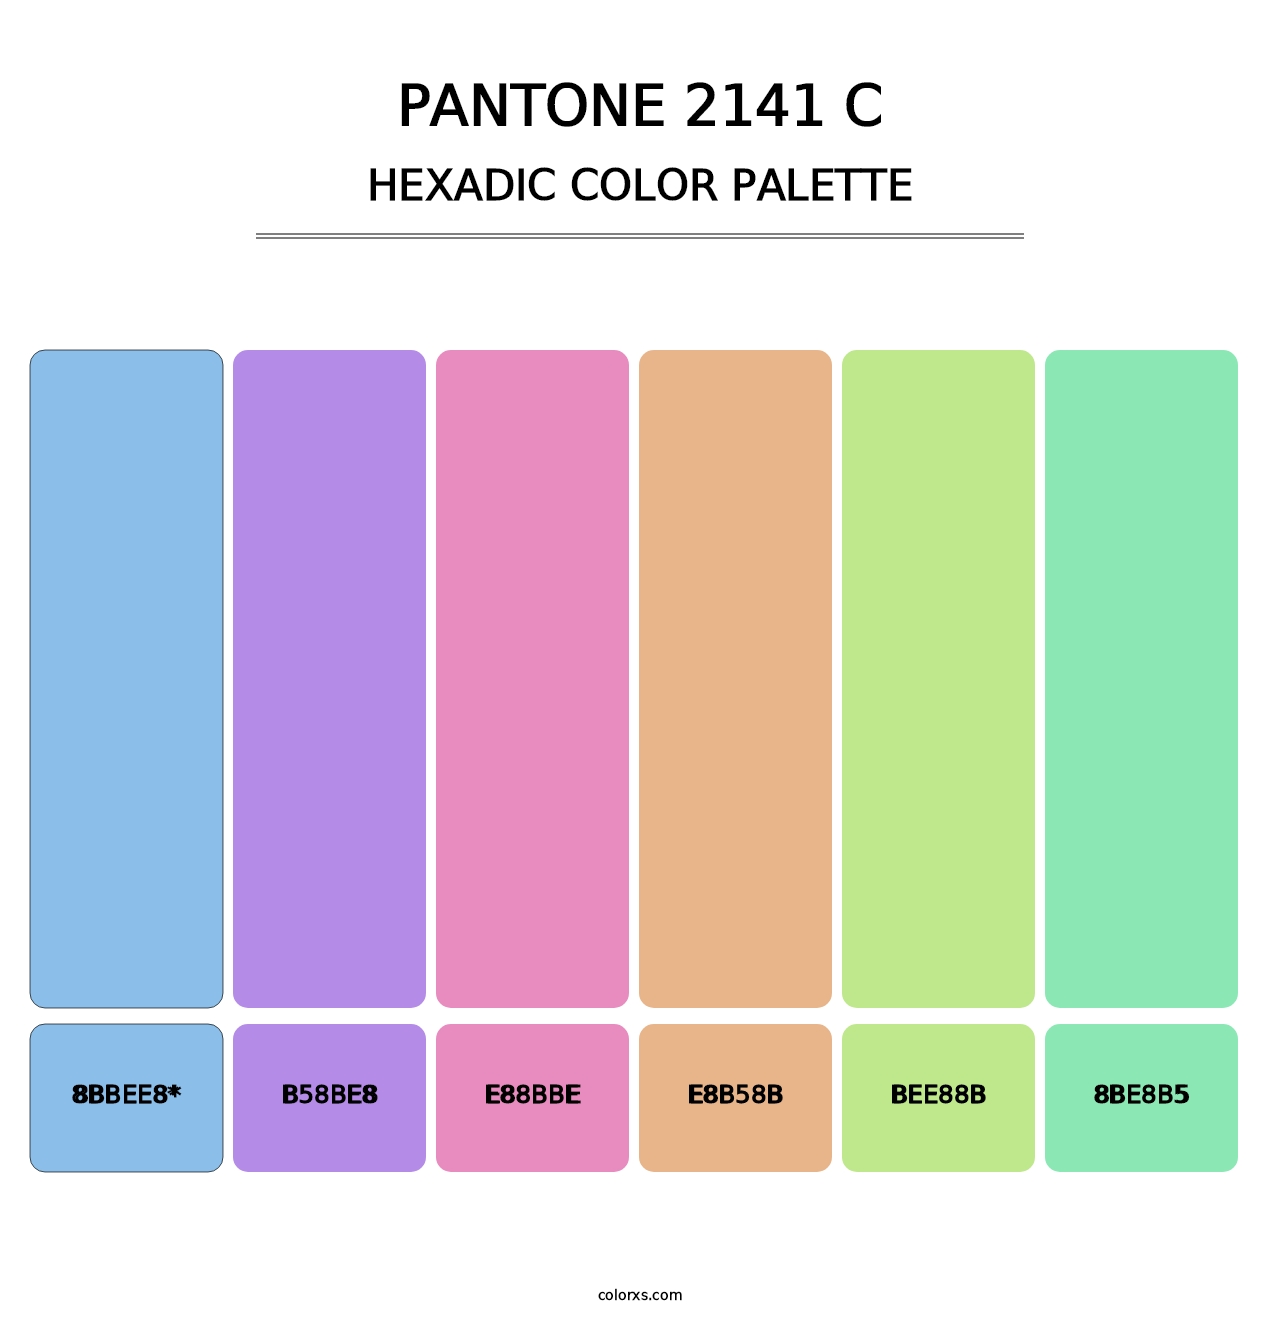 PANTONE 2141 C - Hexadic Color Palette